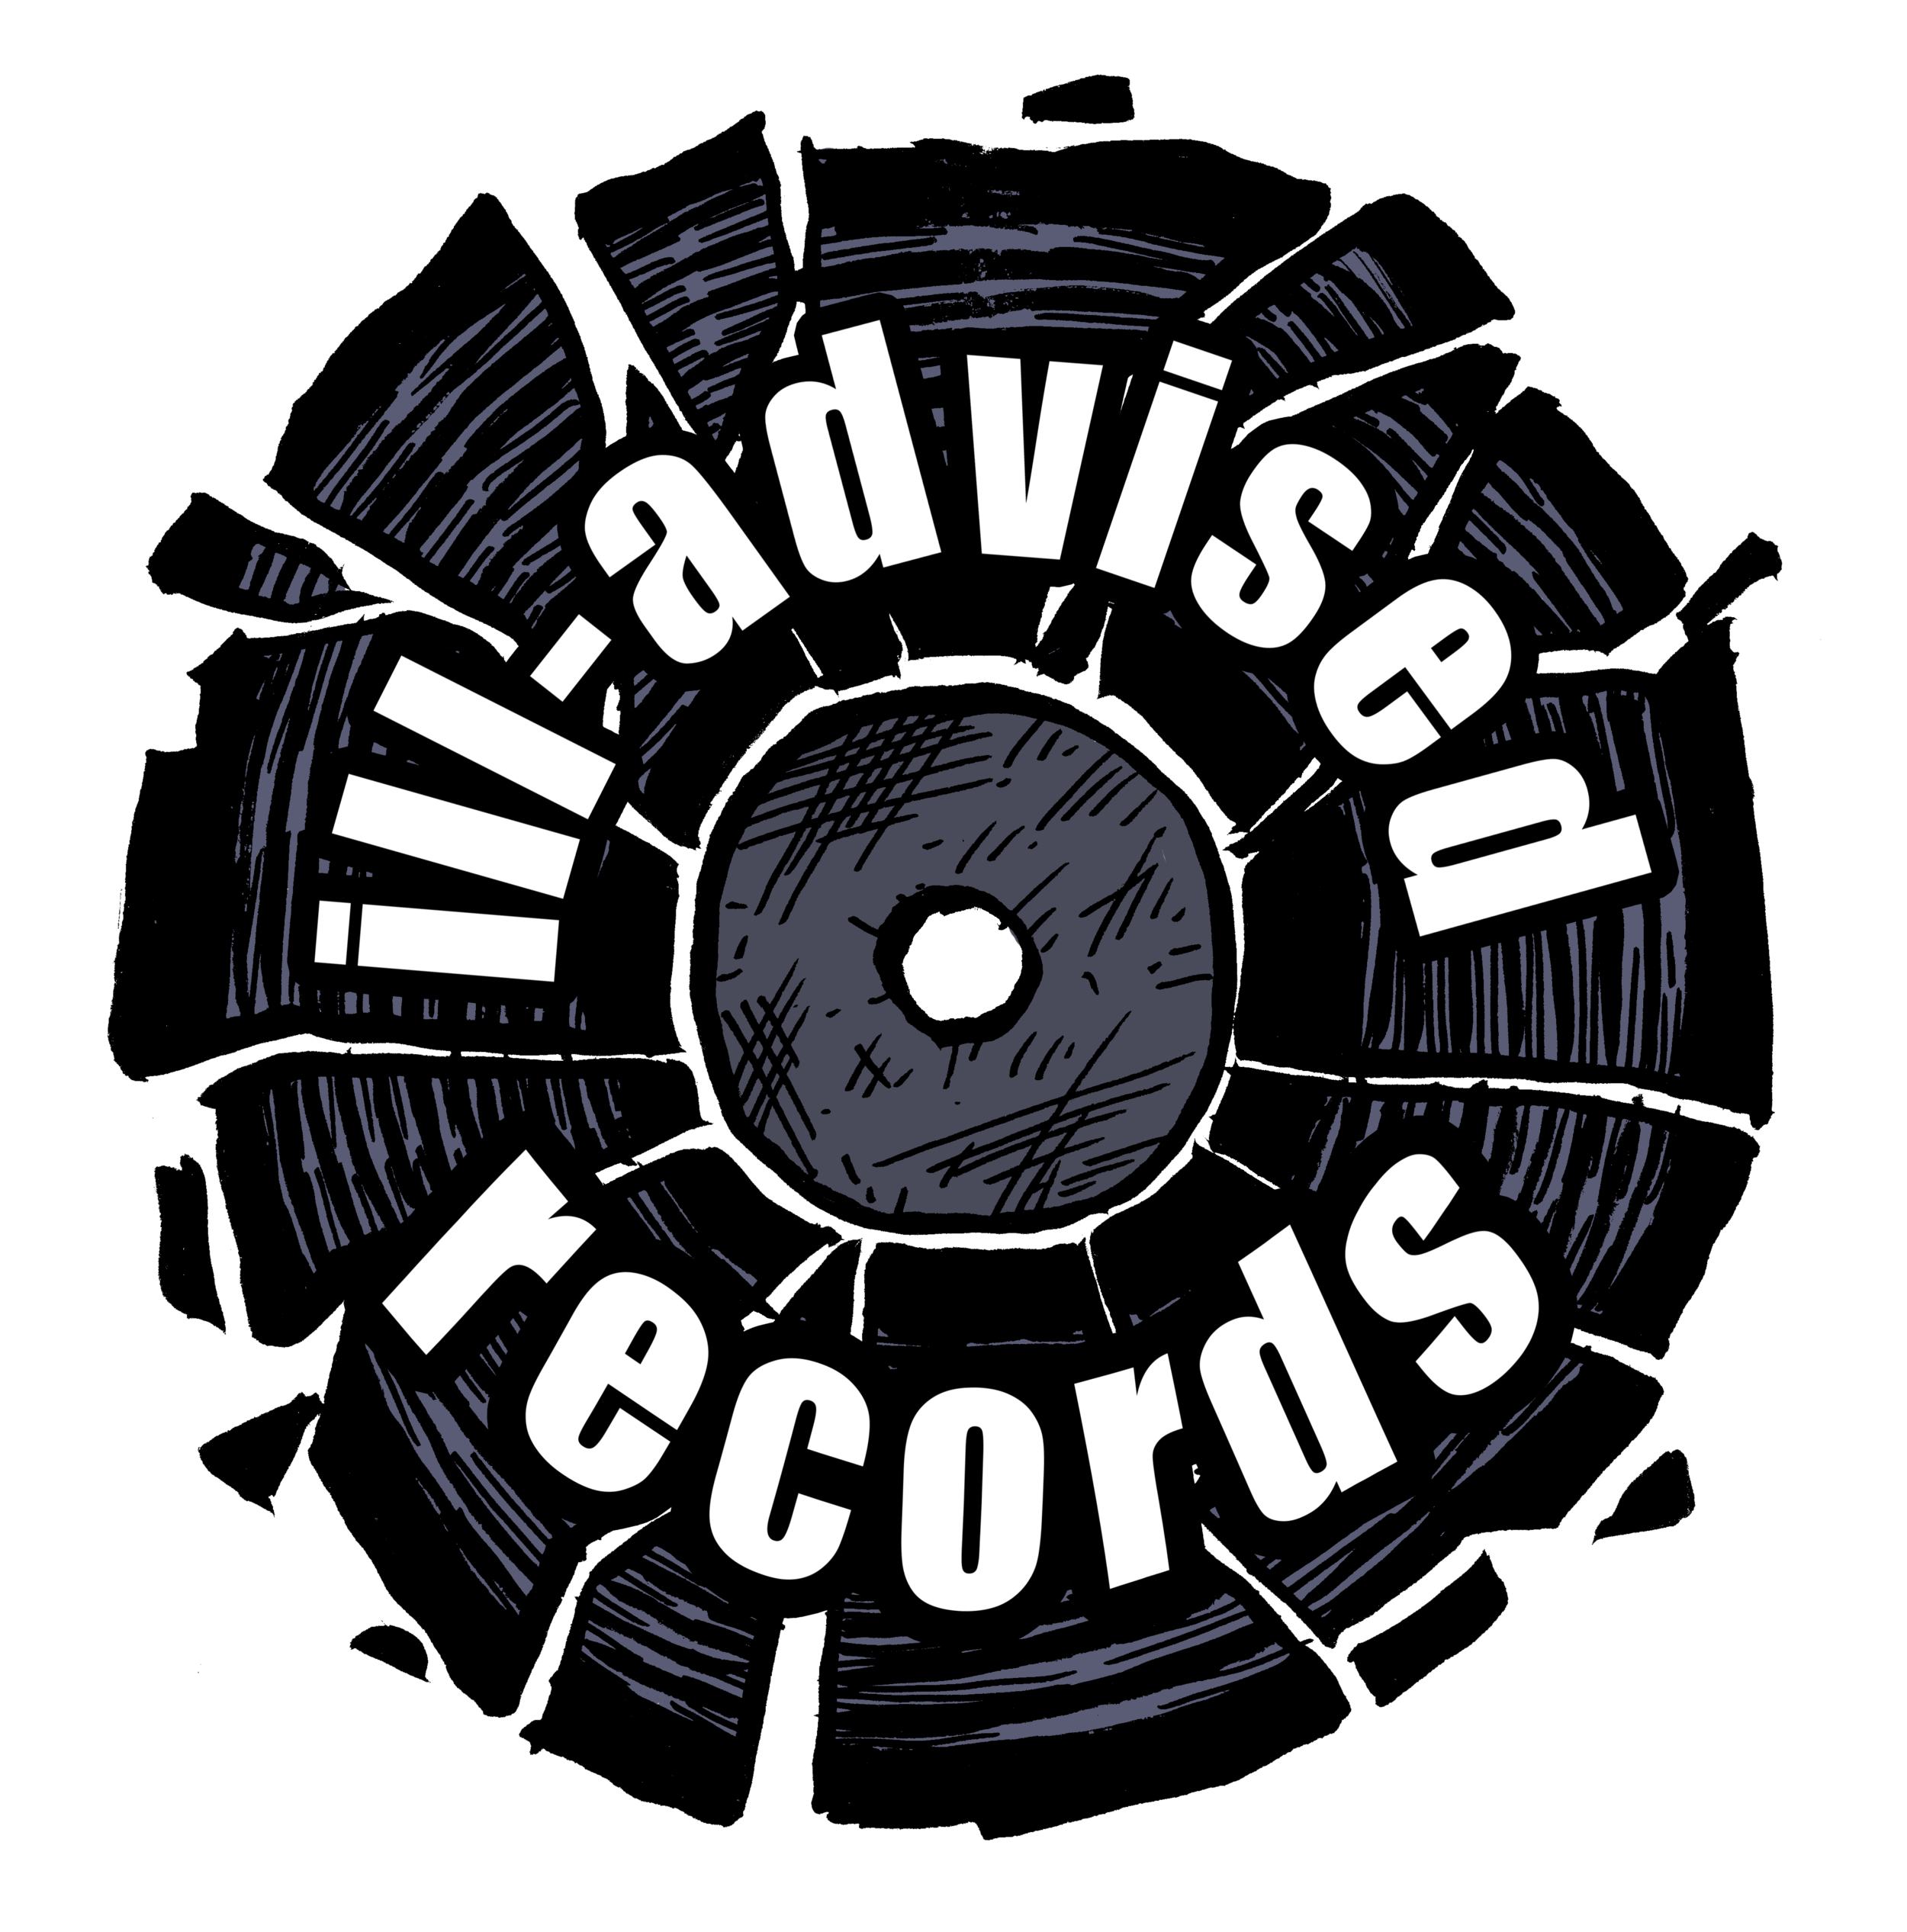 ill-advised records